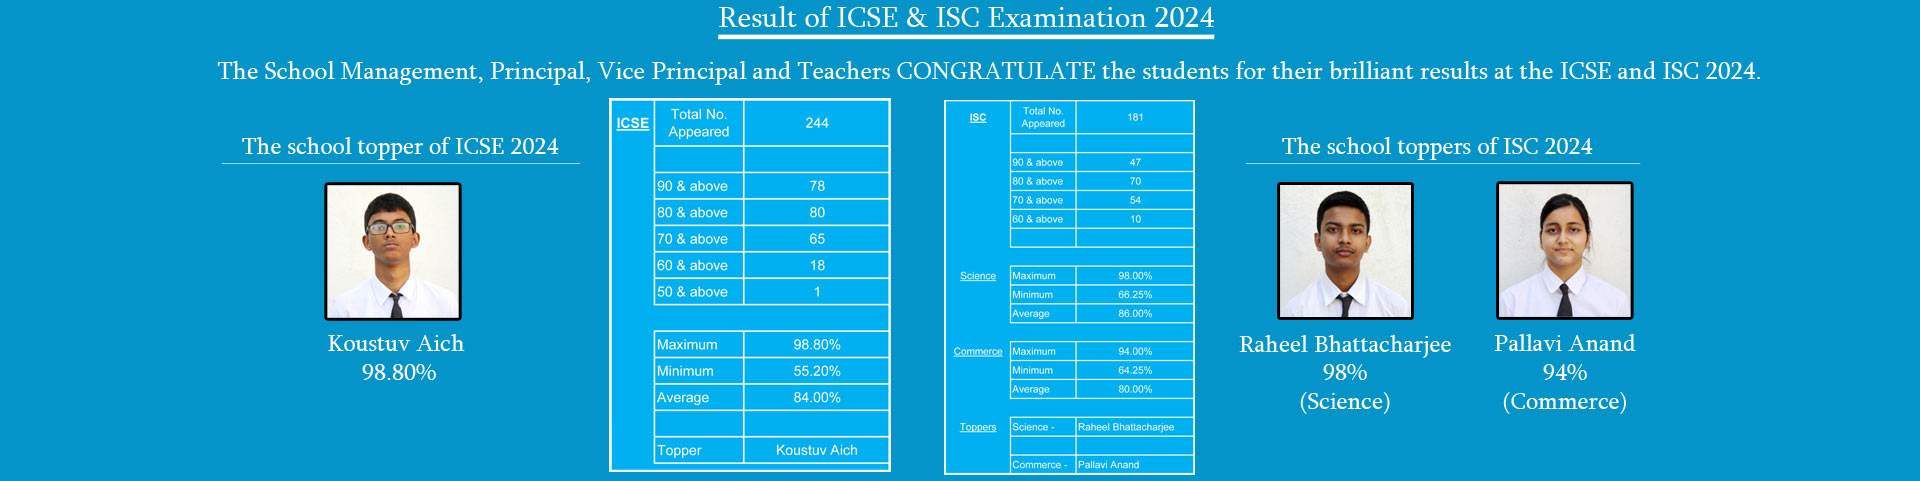 Result of ICSE & ISC Examination 2024